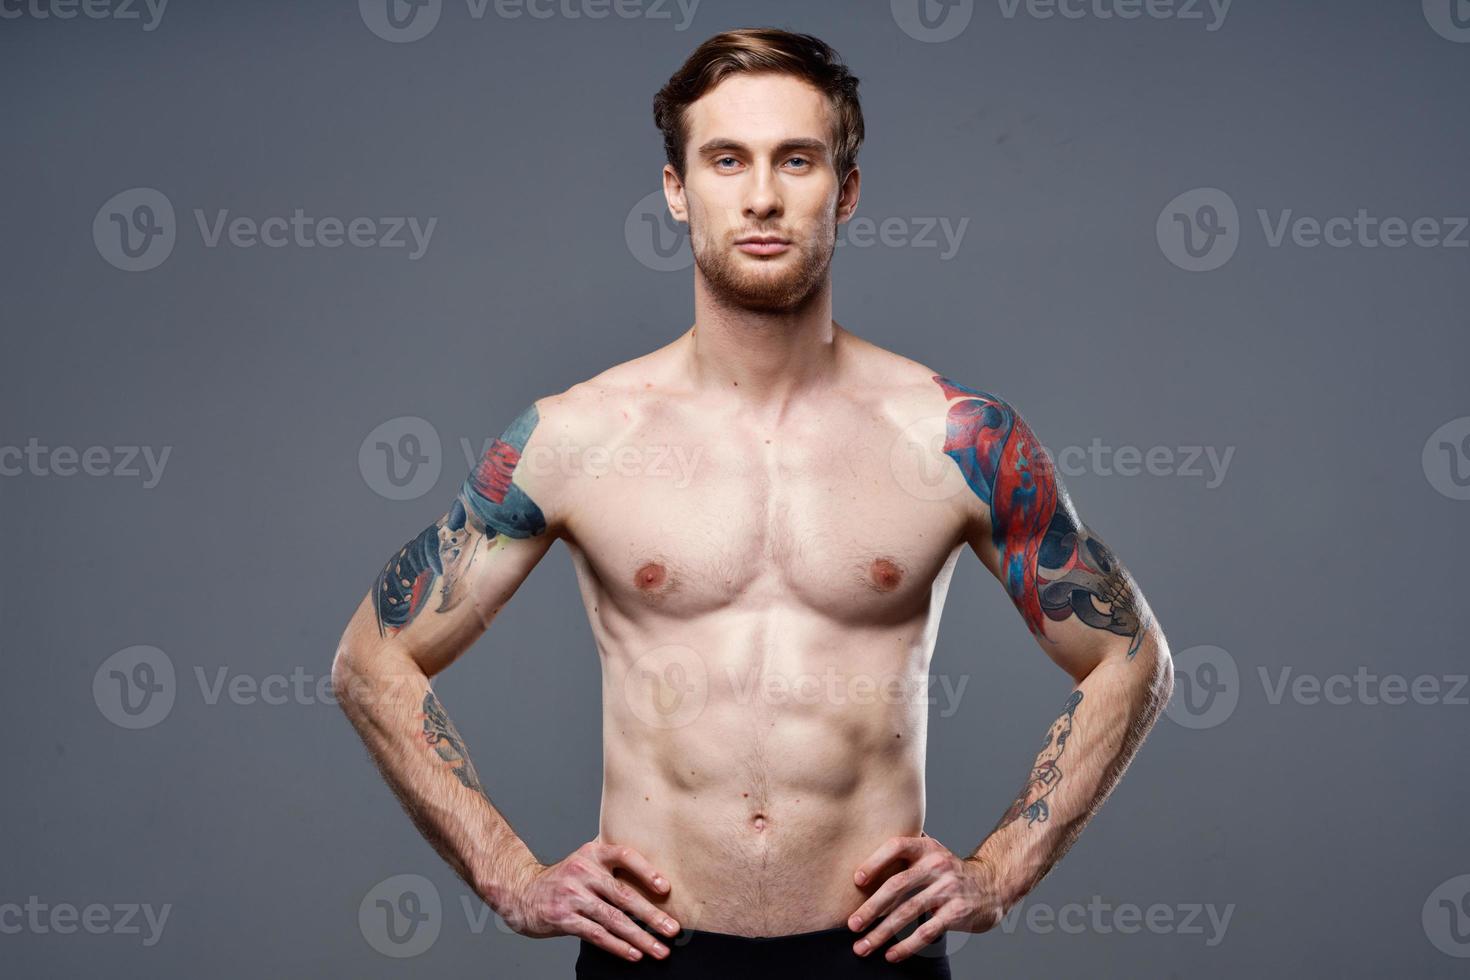 sportivo uomo tatuaggi su il suo braccia nudo torso bodybuilder grigio sfondo foto